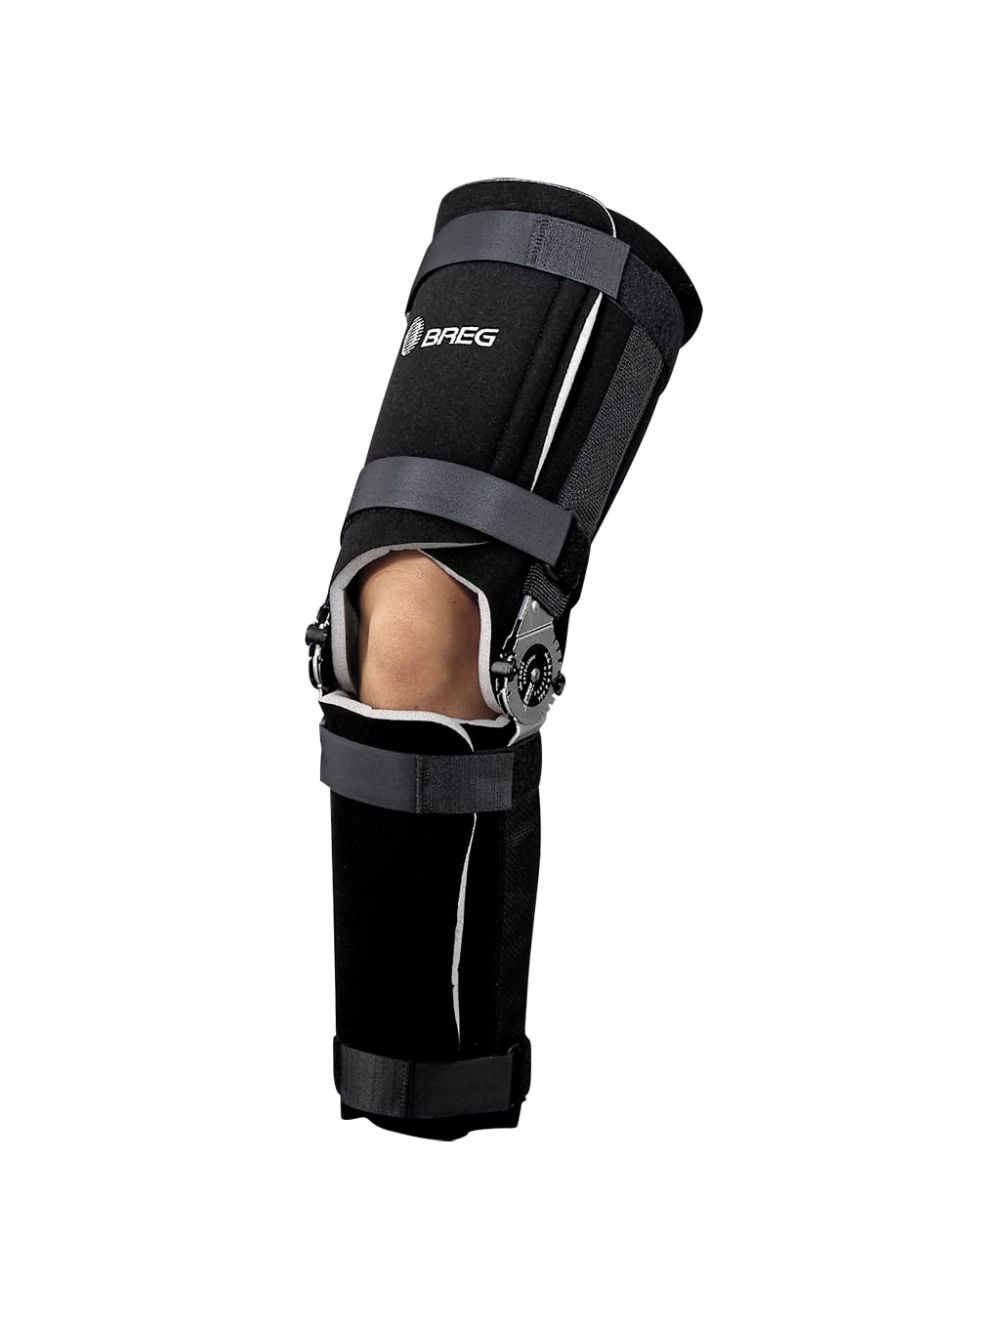 https://www.usawheelchair.com/pub/media/catalog/product/cache/ddb236bdd69ff7cc1401d94c525e1745/k/n/knee-bracing-breg-quick-fit-epo-post-op-knee-brace-1.jpg